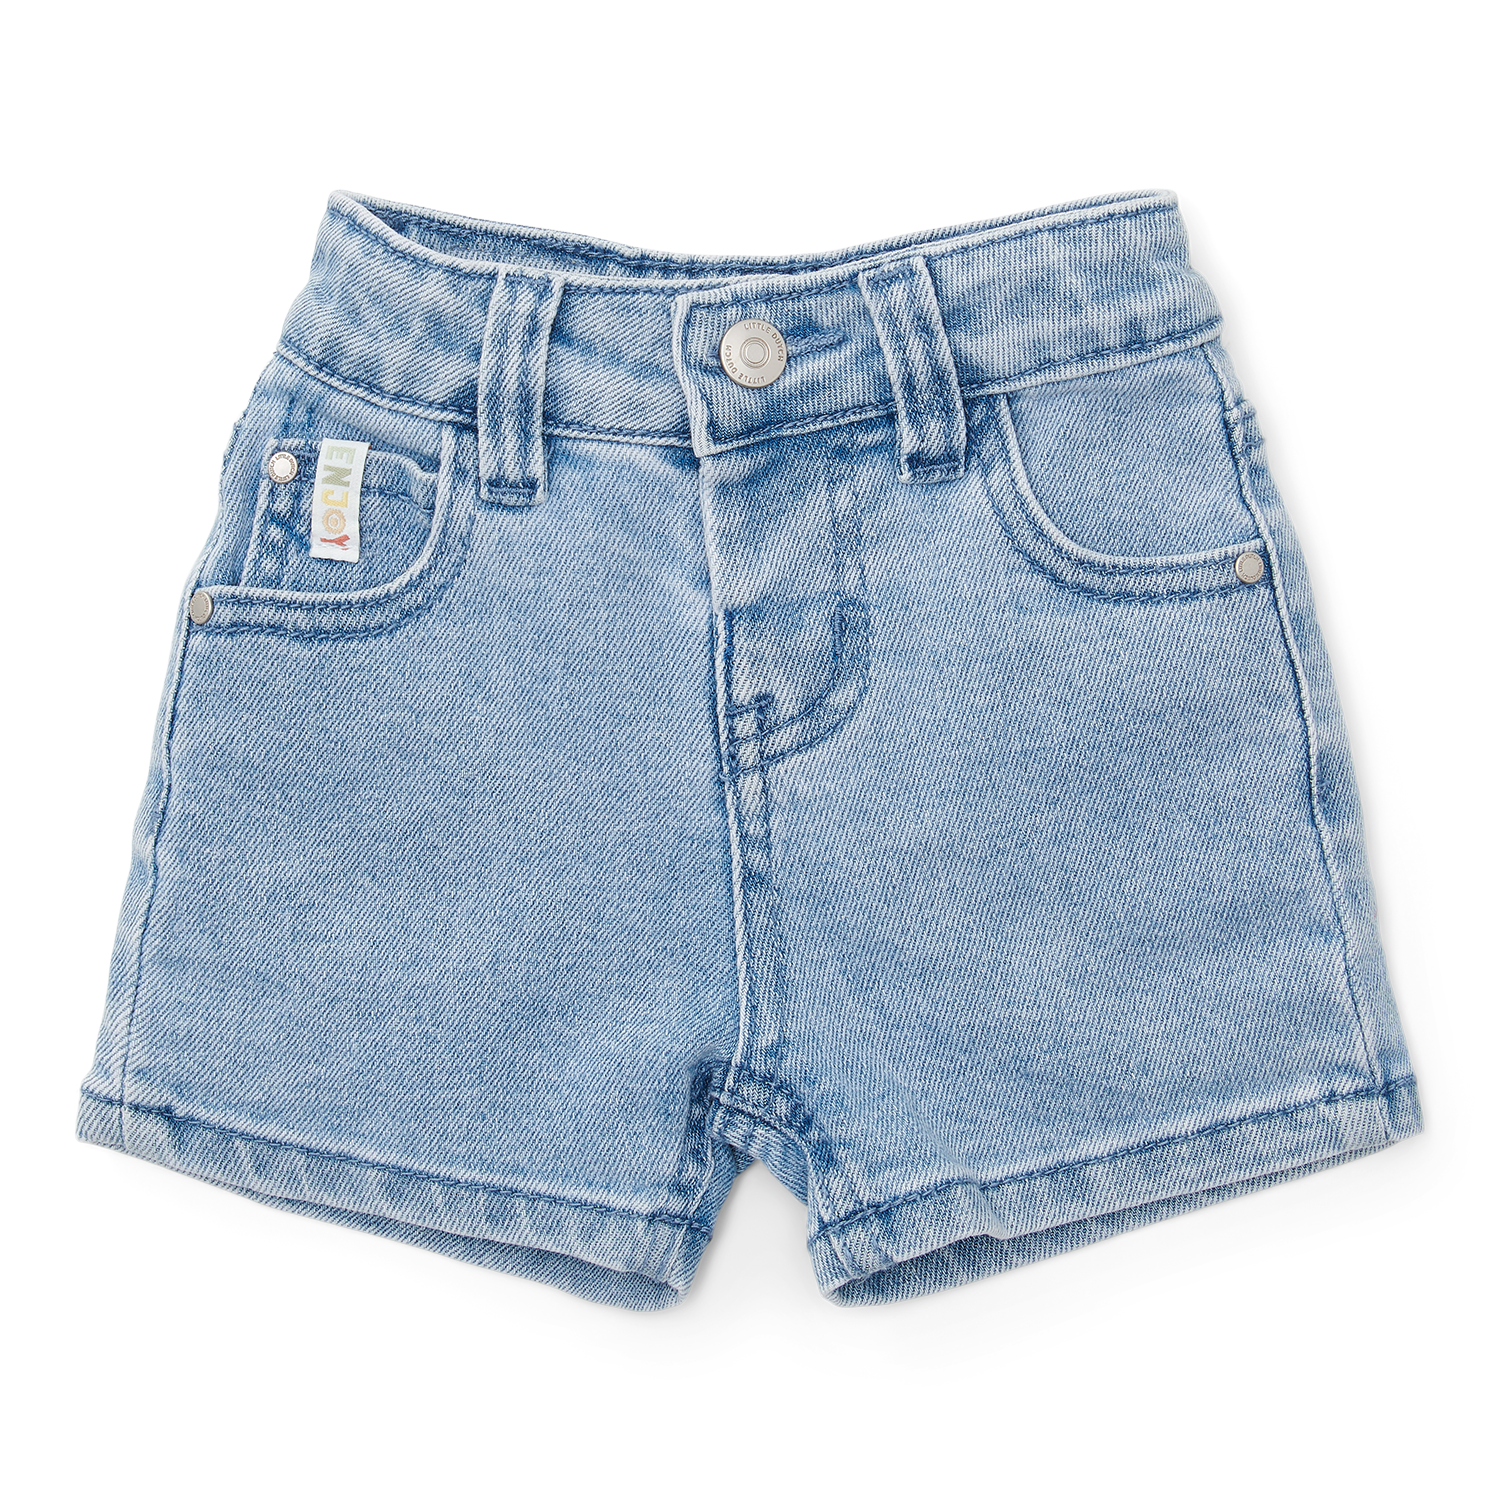 Kurze Hose / Shorts Denim mit Taschen Little Farm jeans (Gr. 74)